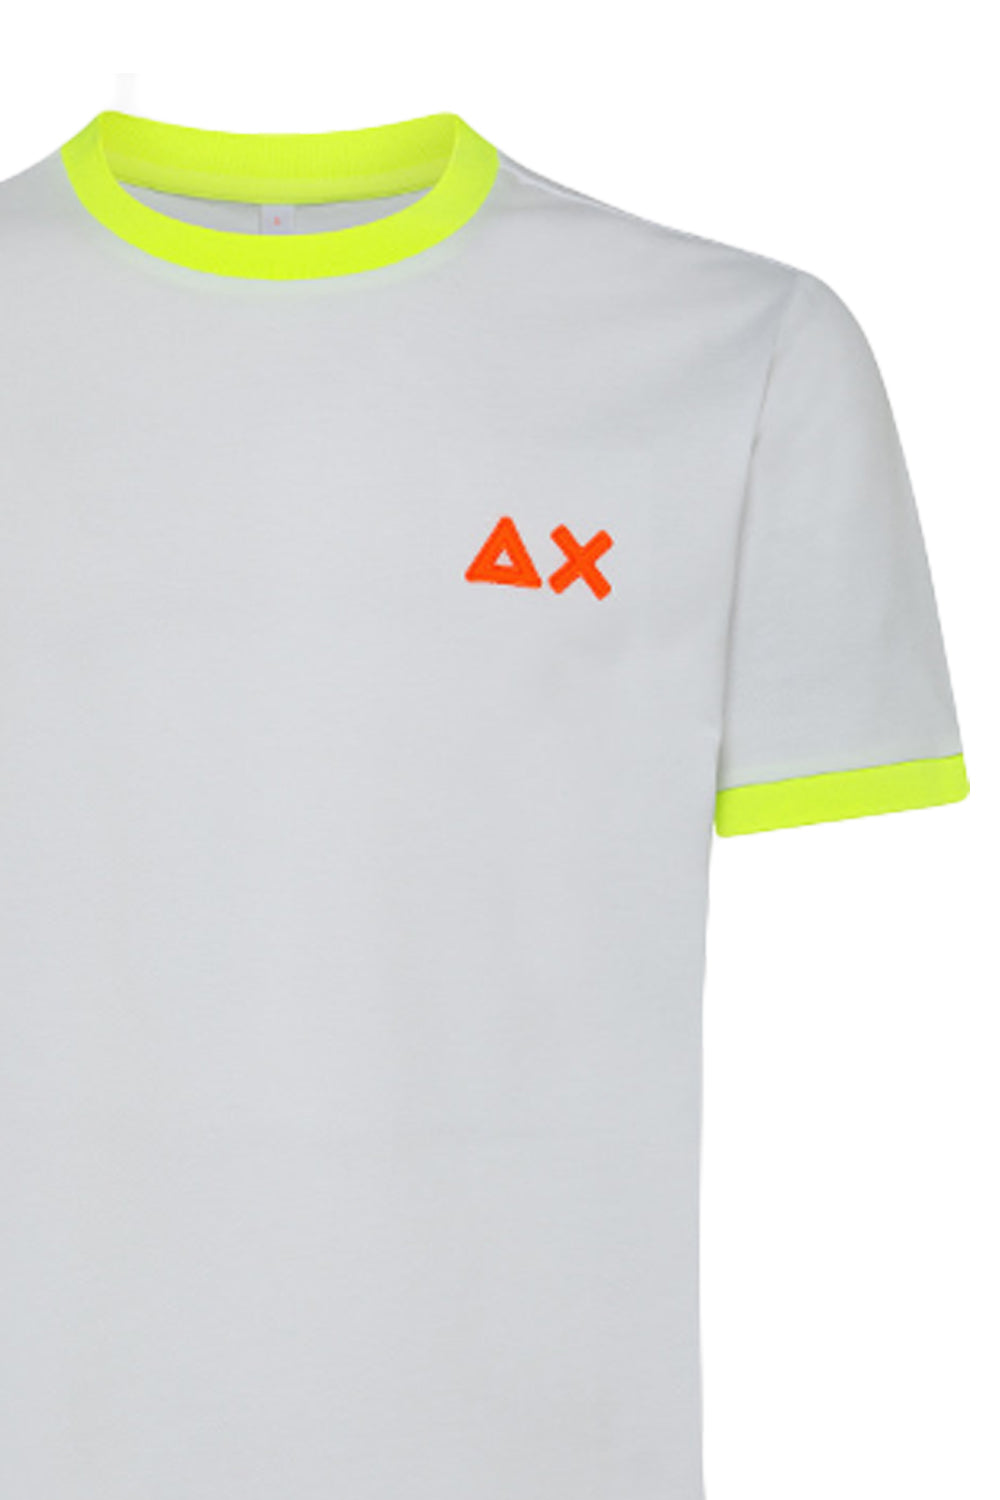 SUN68 Tshirt logo fluo